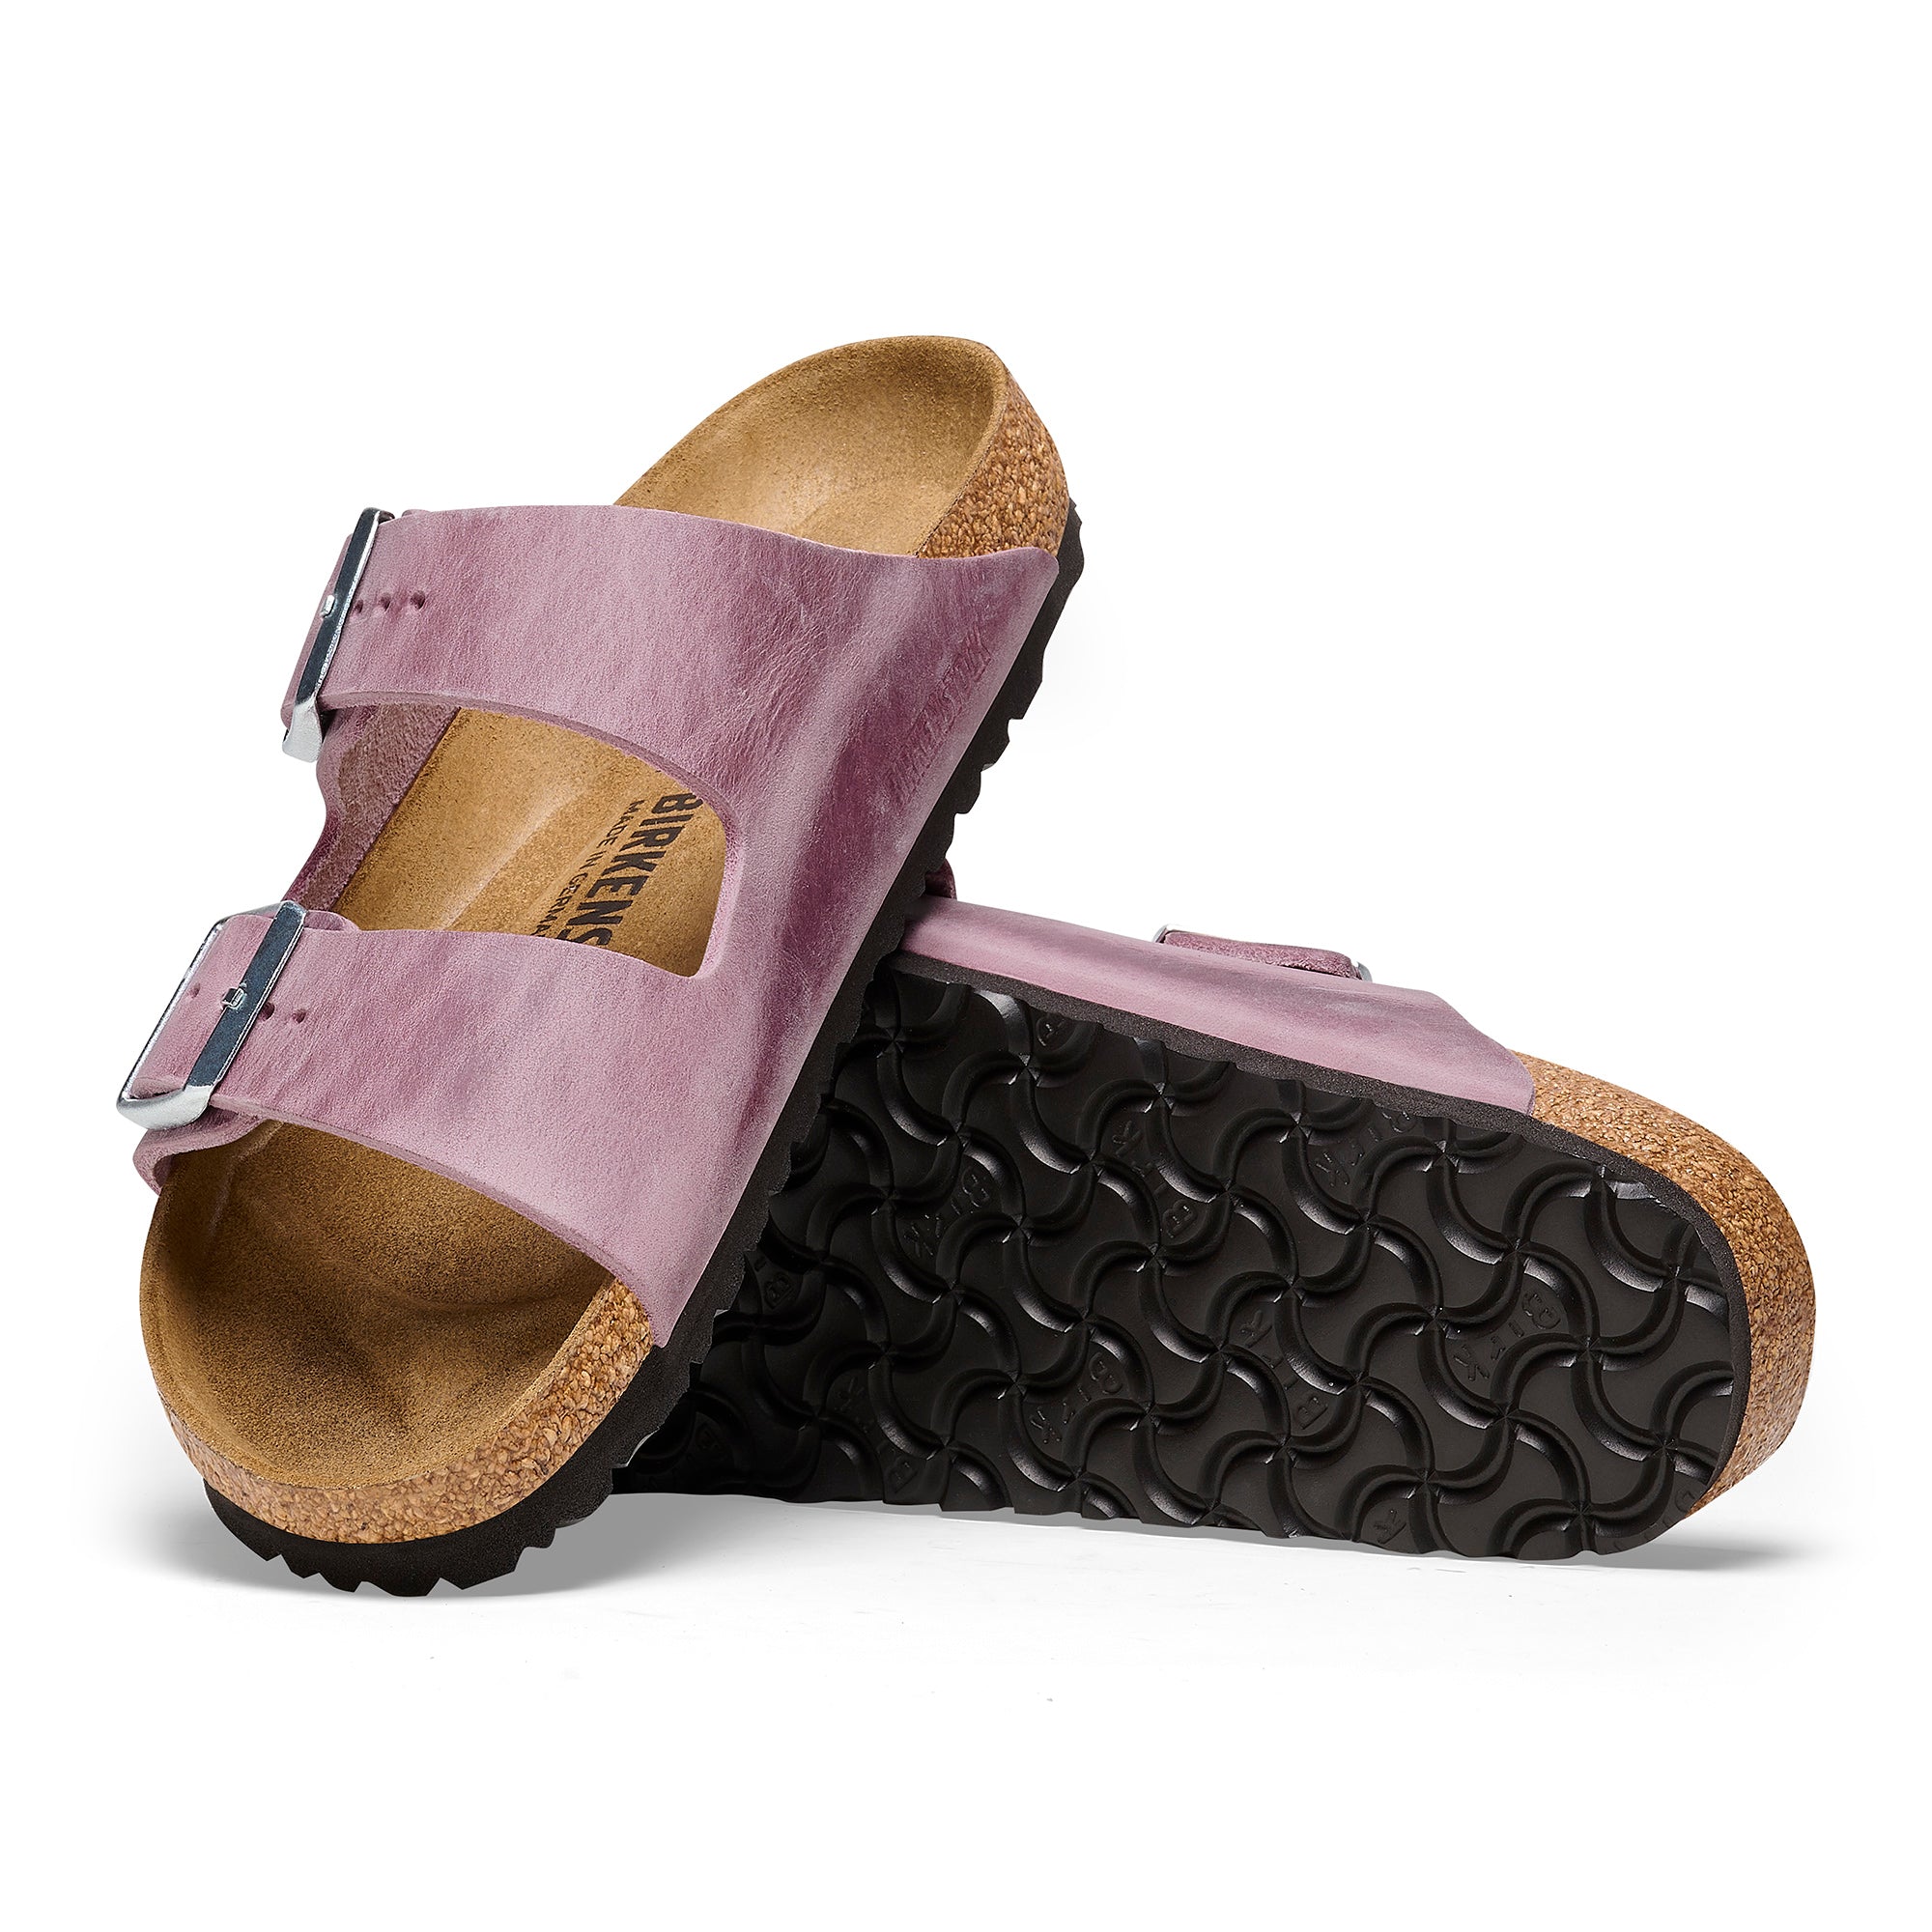 arizona soft footbed oiled leather ltd REG